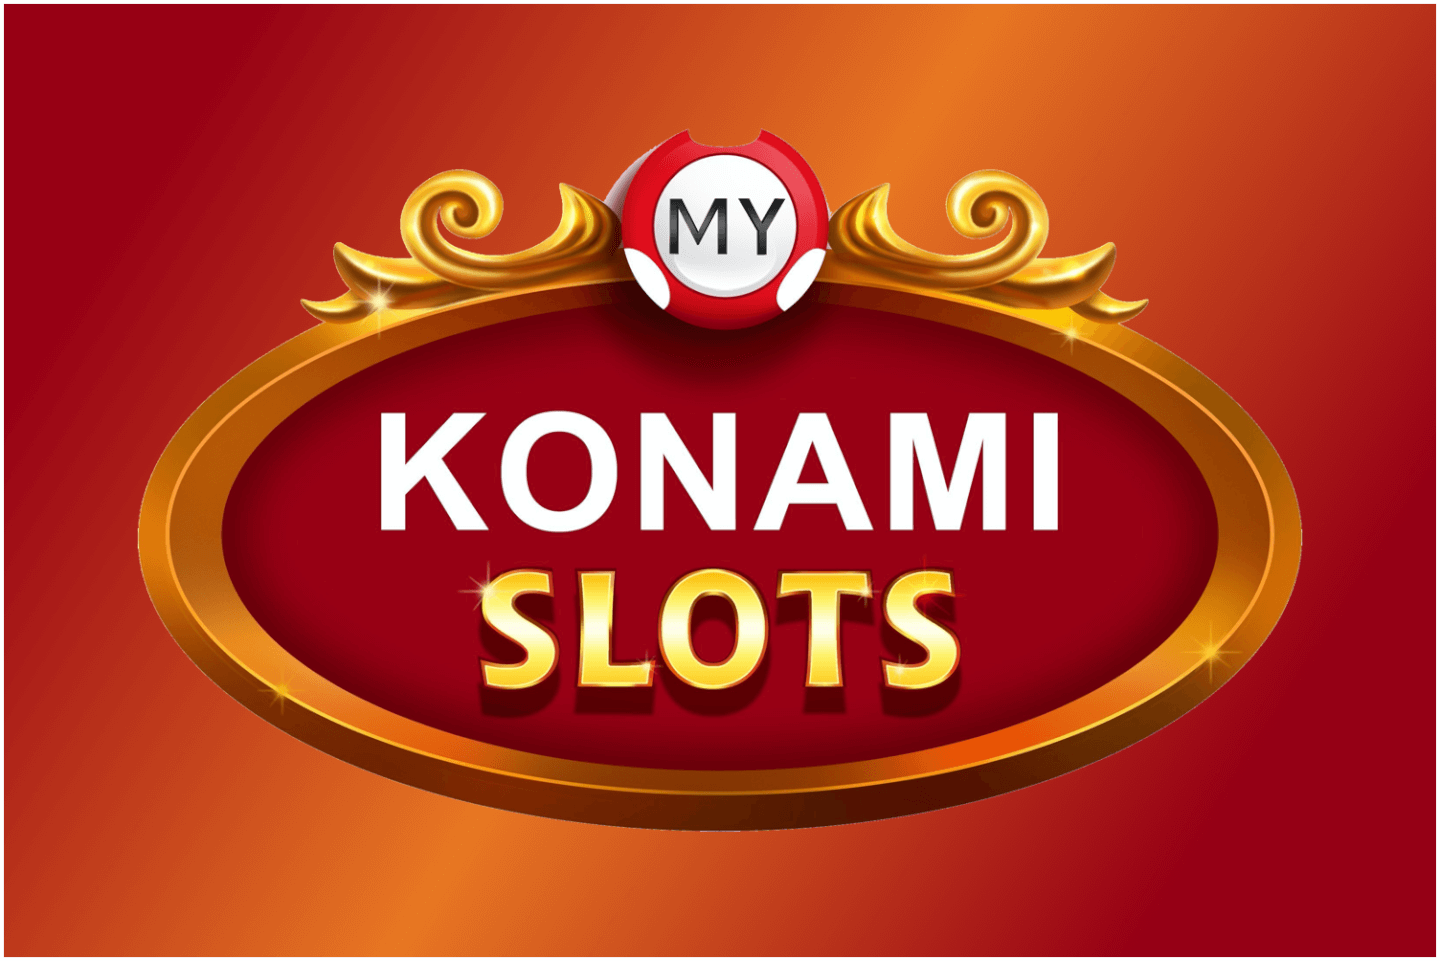 Konami slots logo